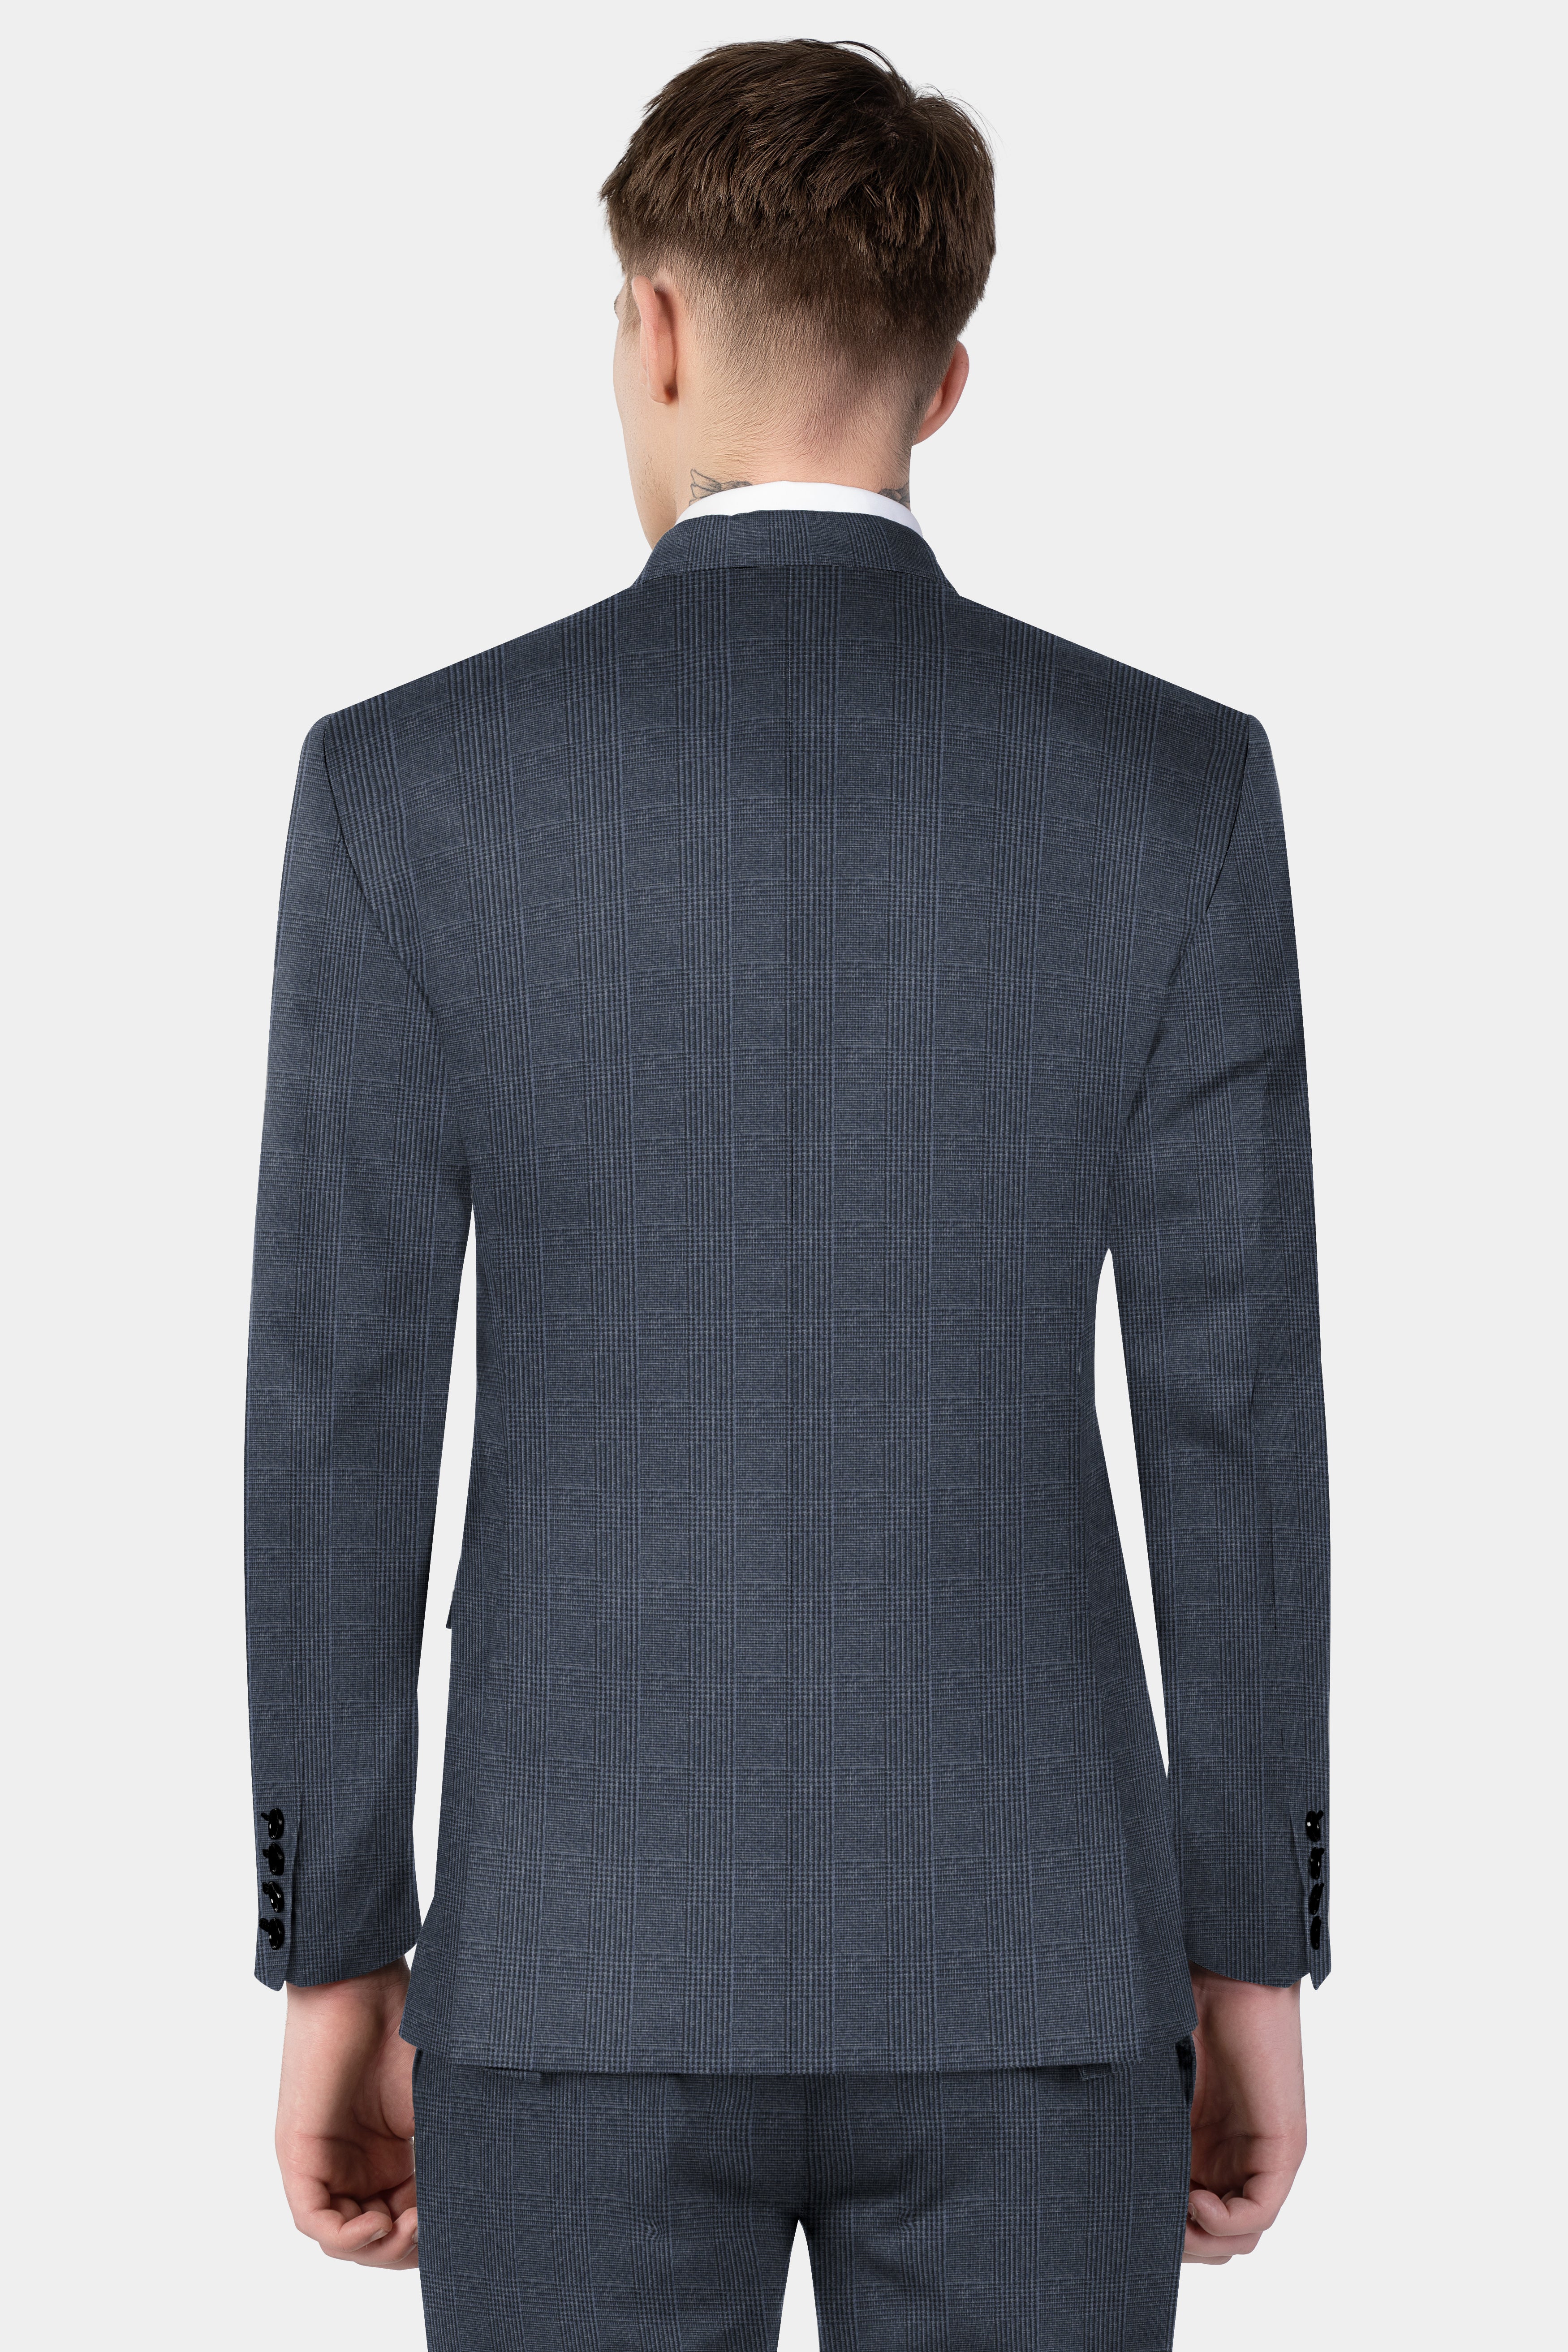 Gun Powder Gray Plaid Wool Blend Suit